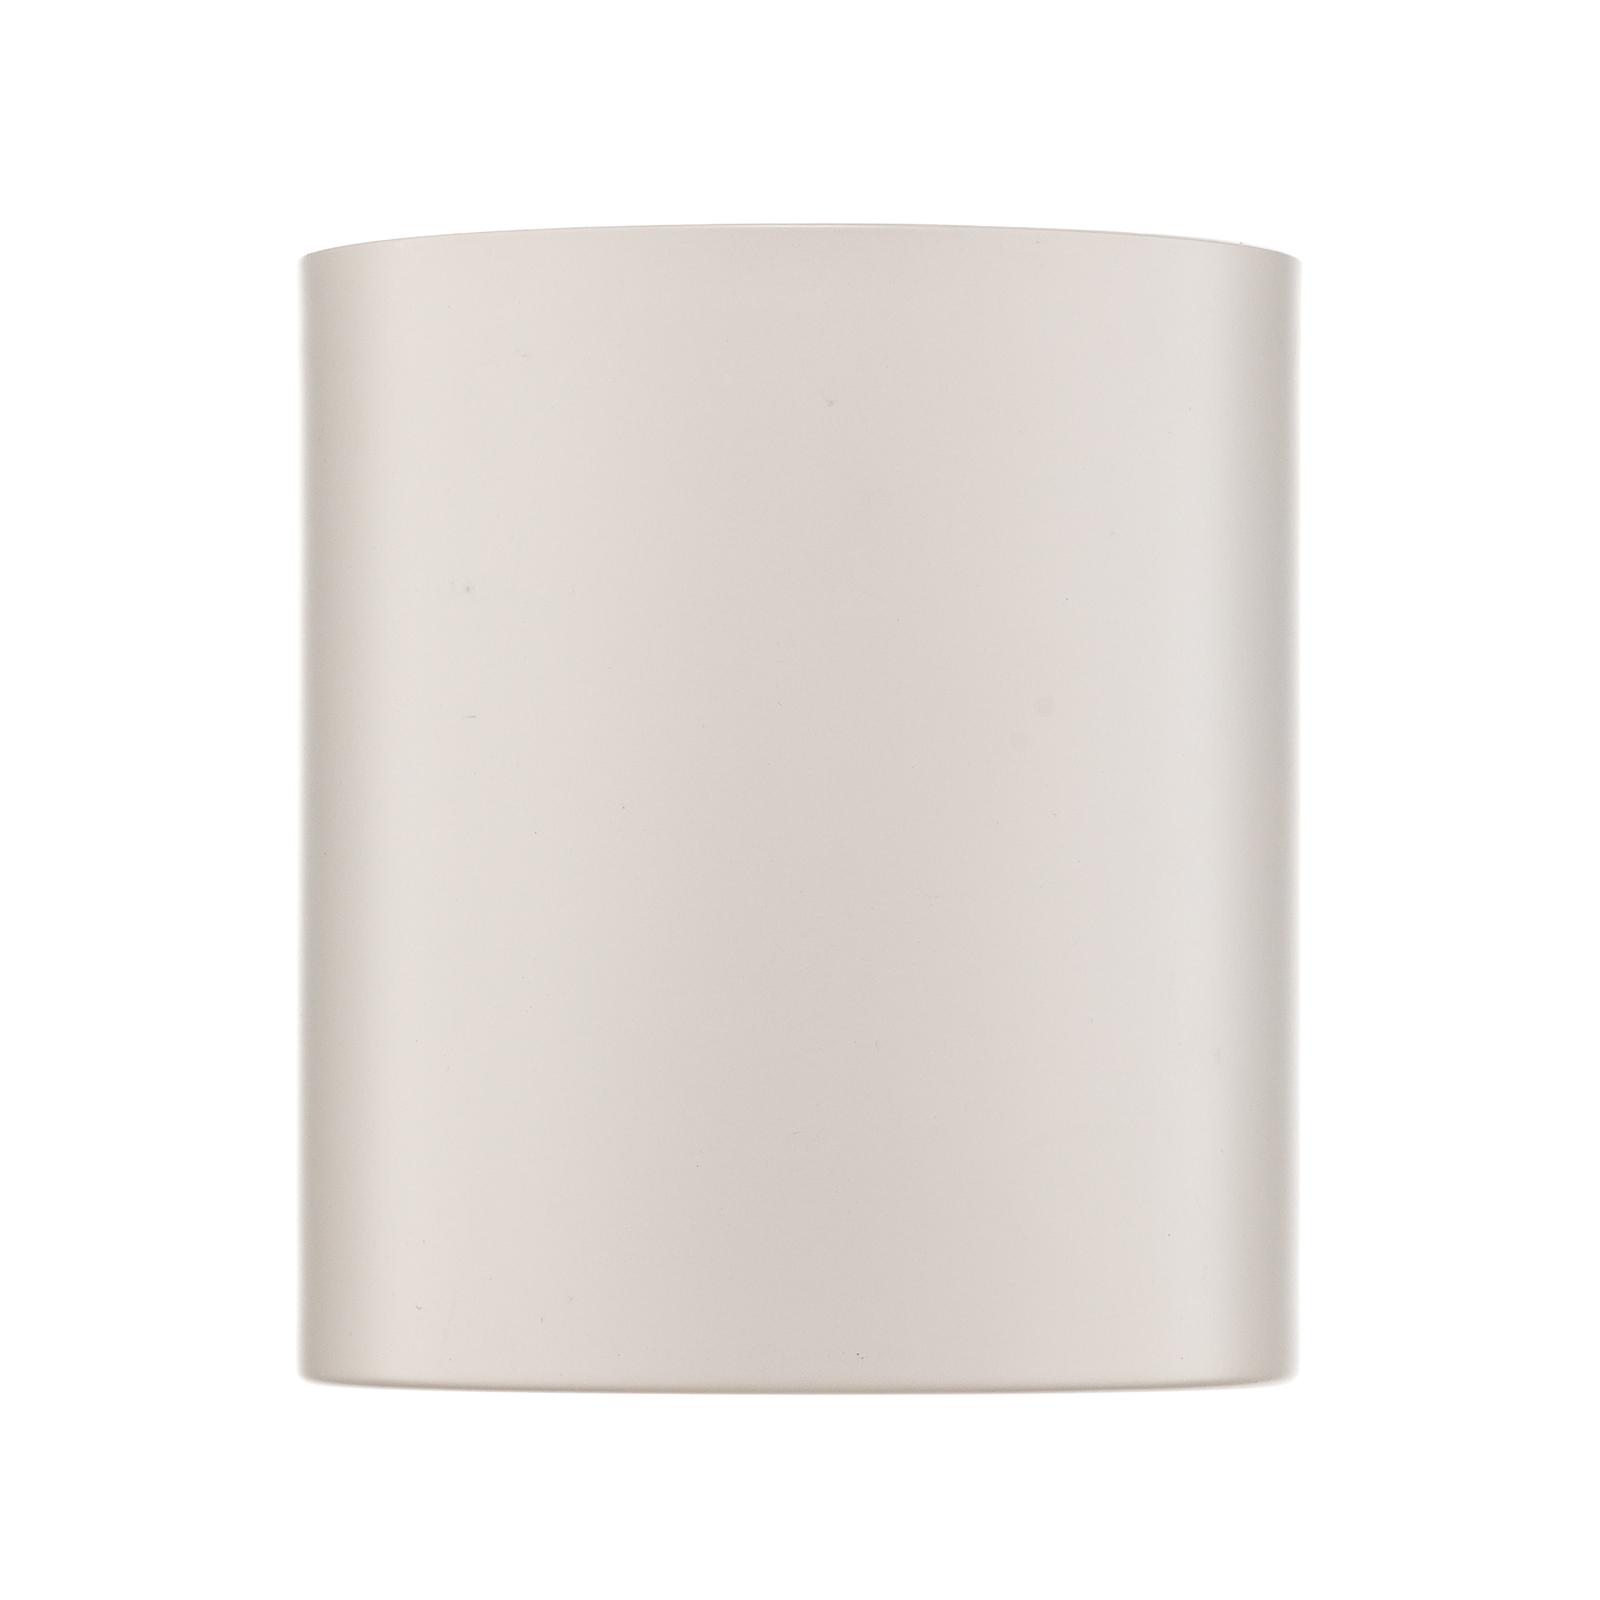 Plafondspot downlight Round in wit, Ø 13,3 cm